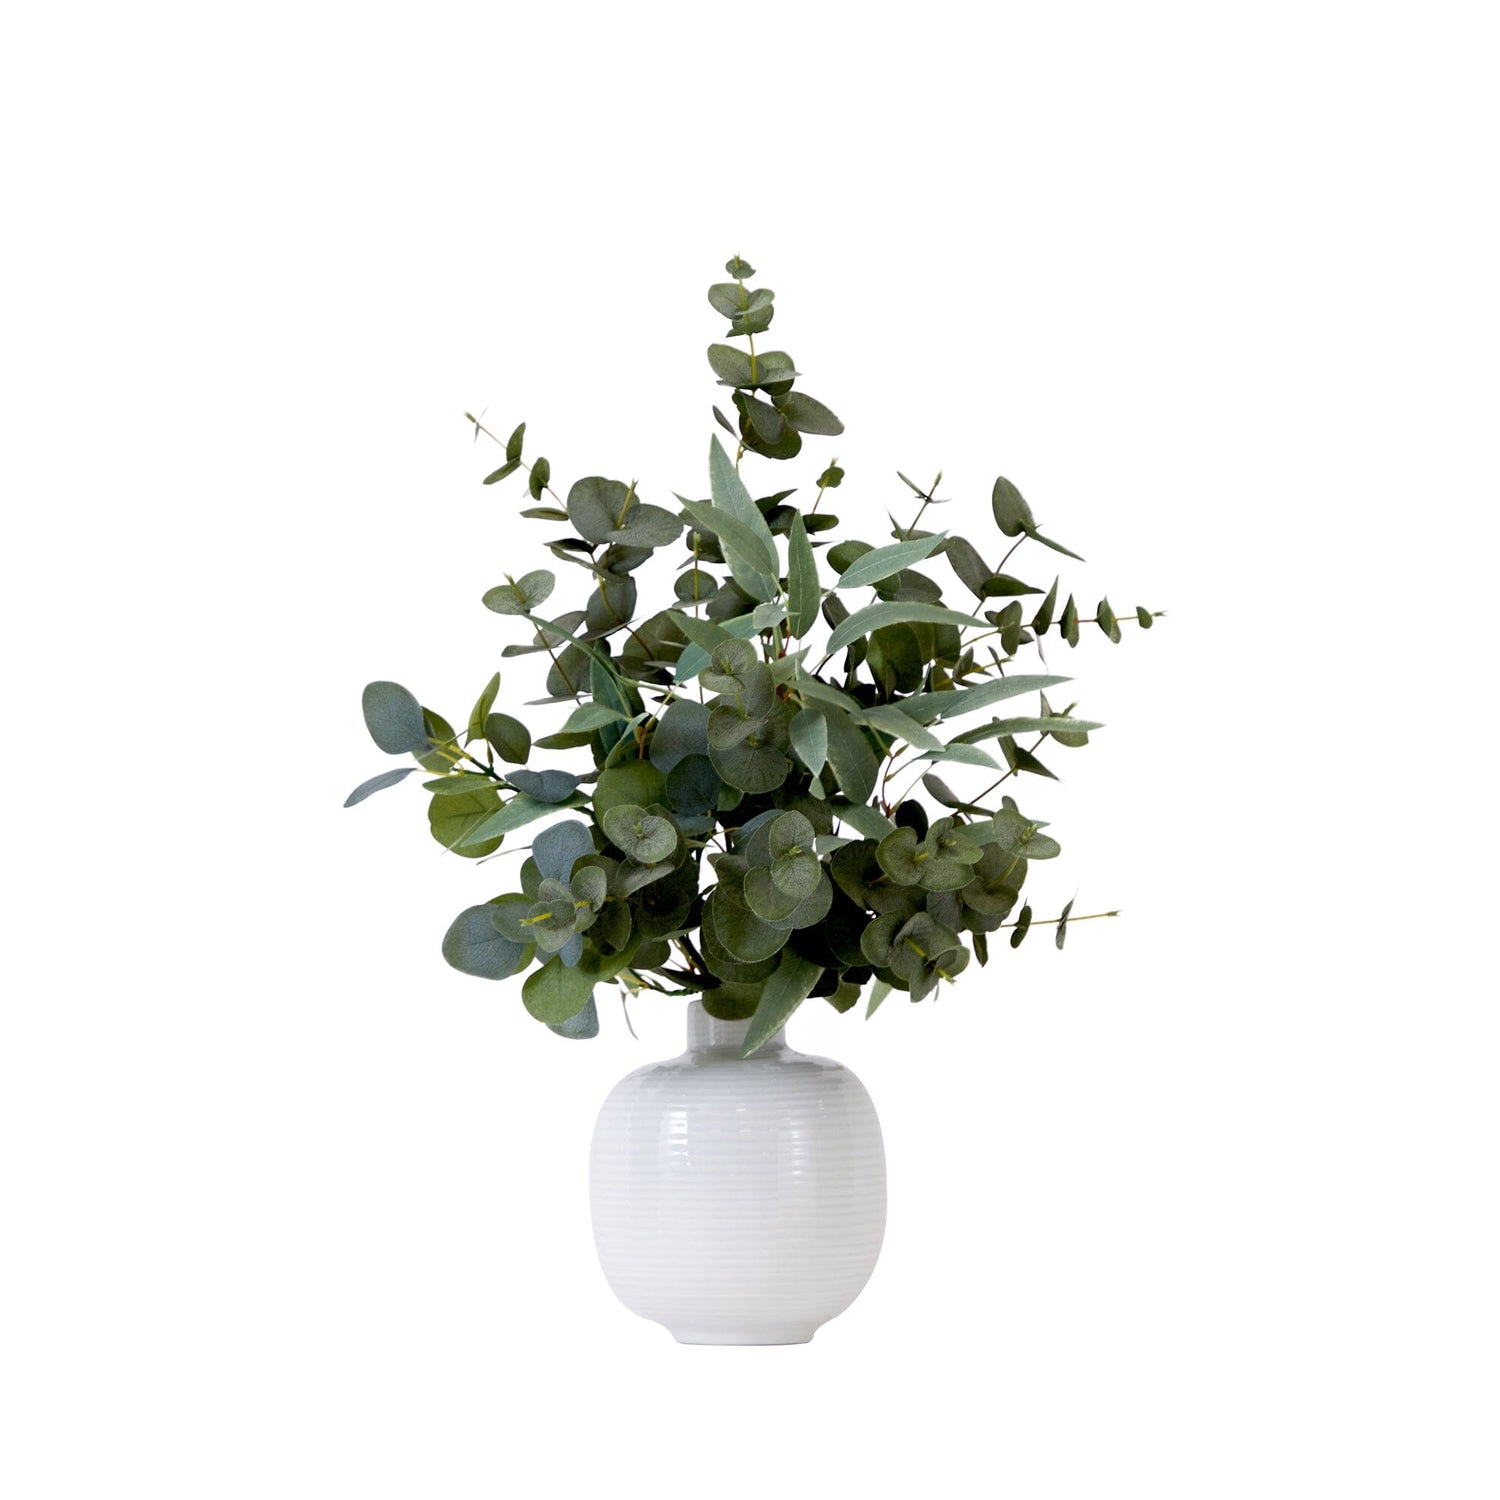 24” Artificial Eucalyptus Leaves Arrangement with Ceramic Planter